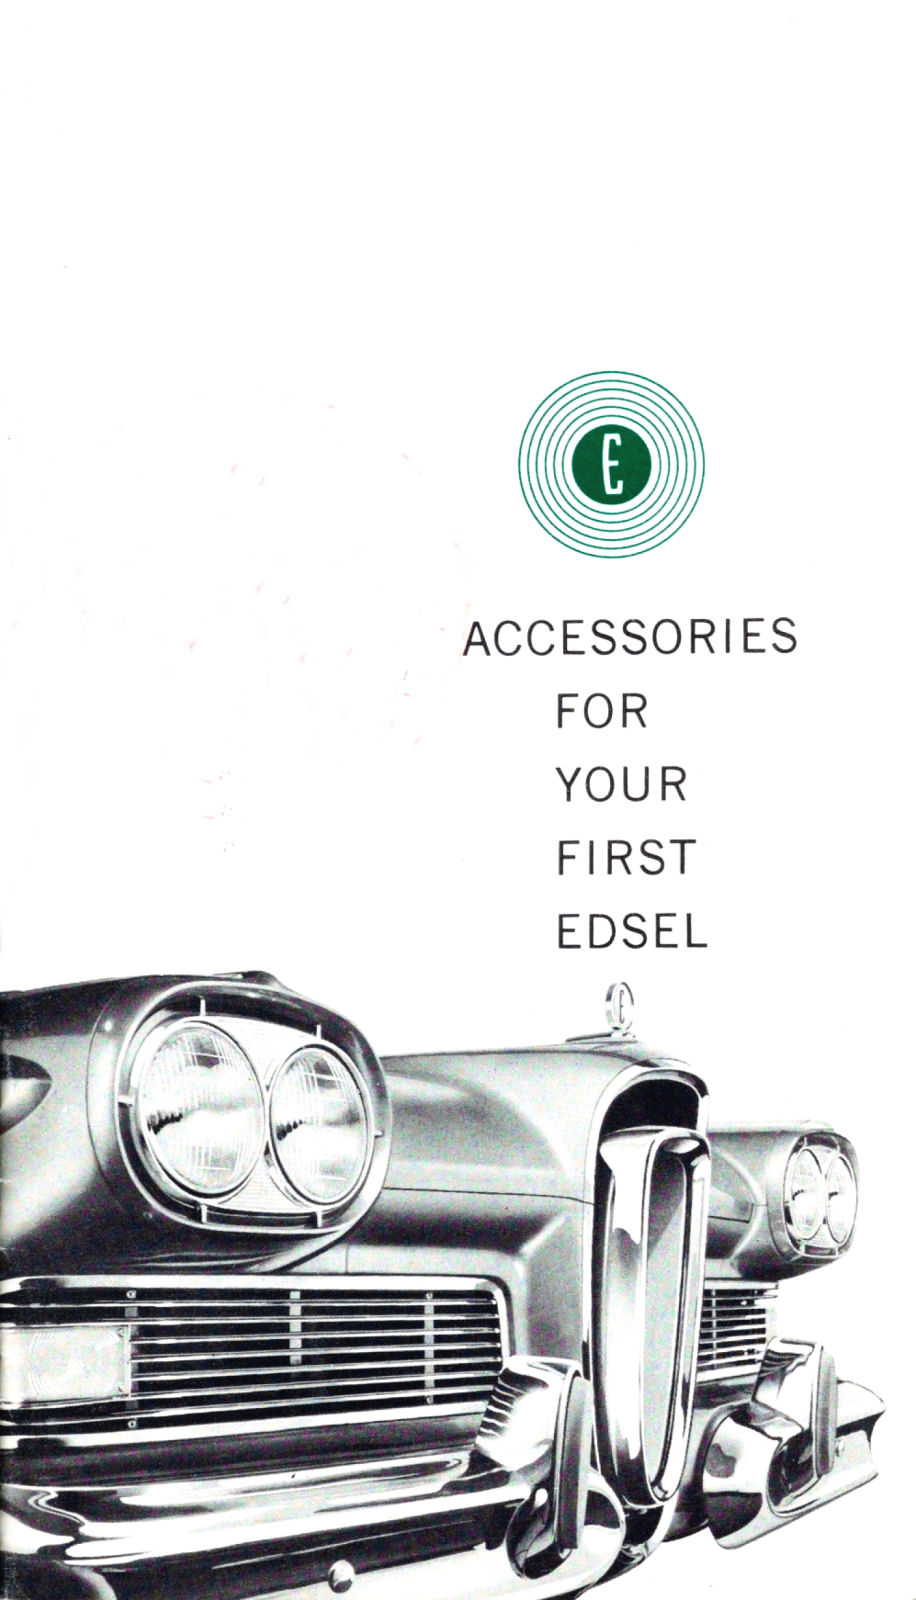 1958 Edsel Accessories-01